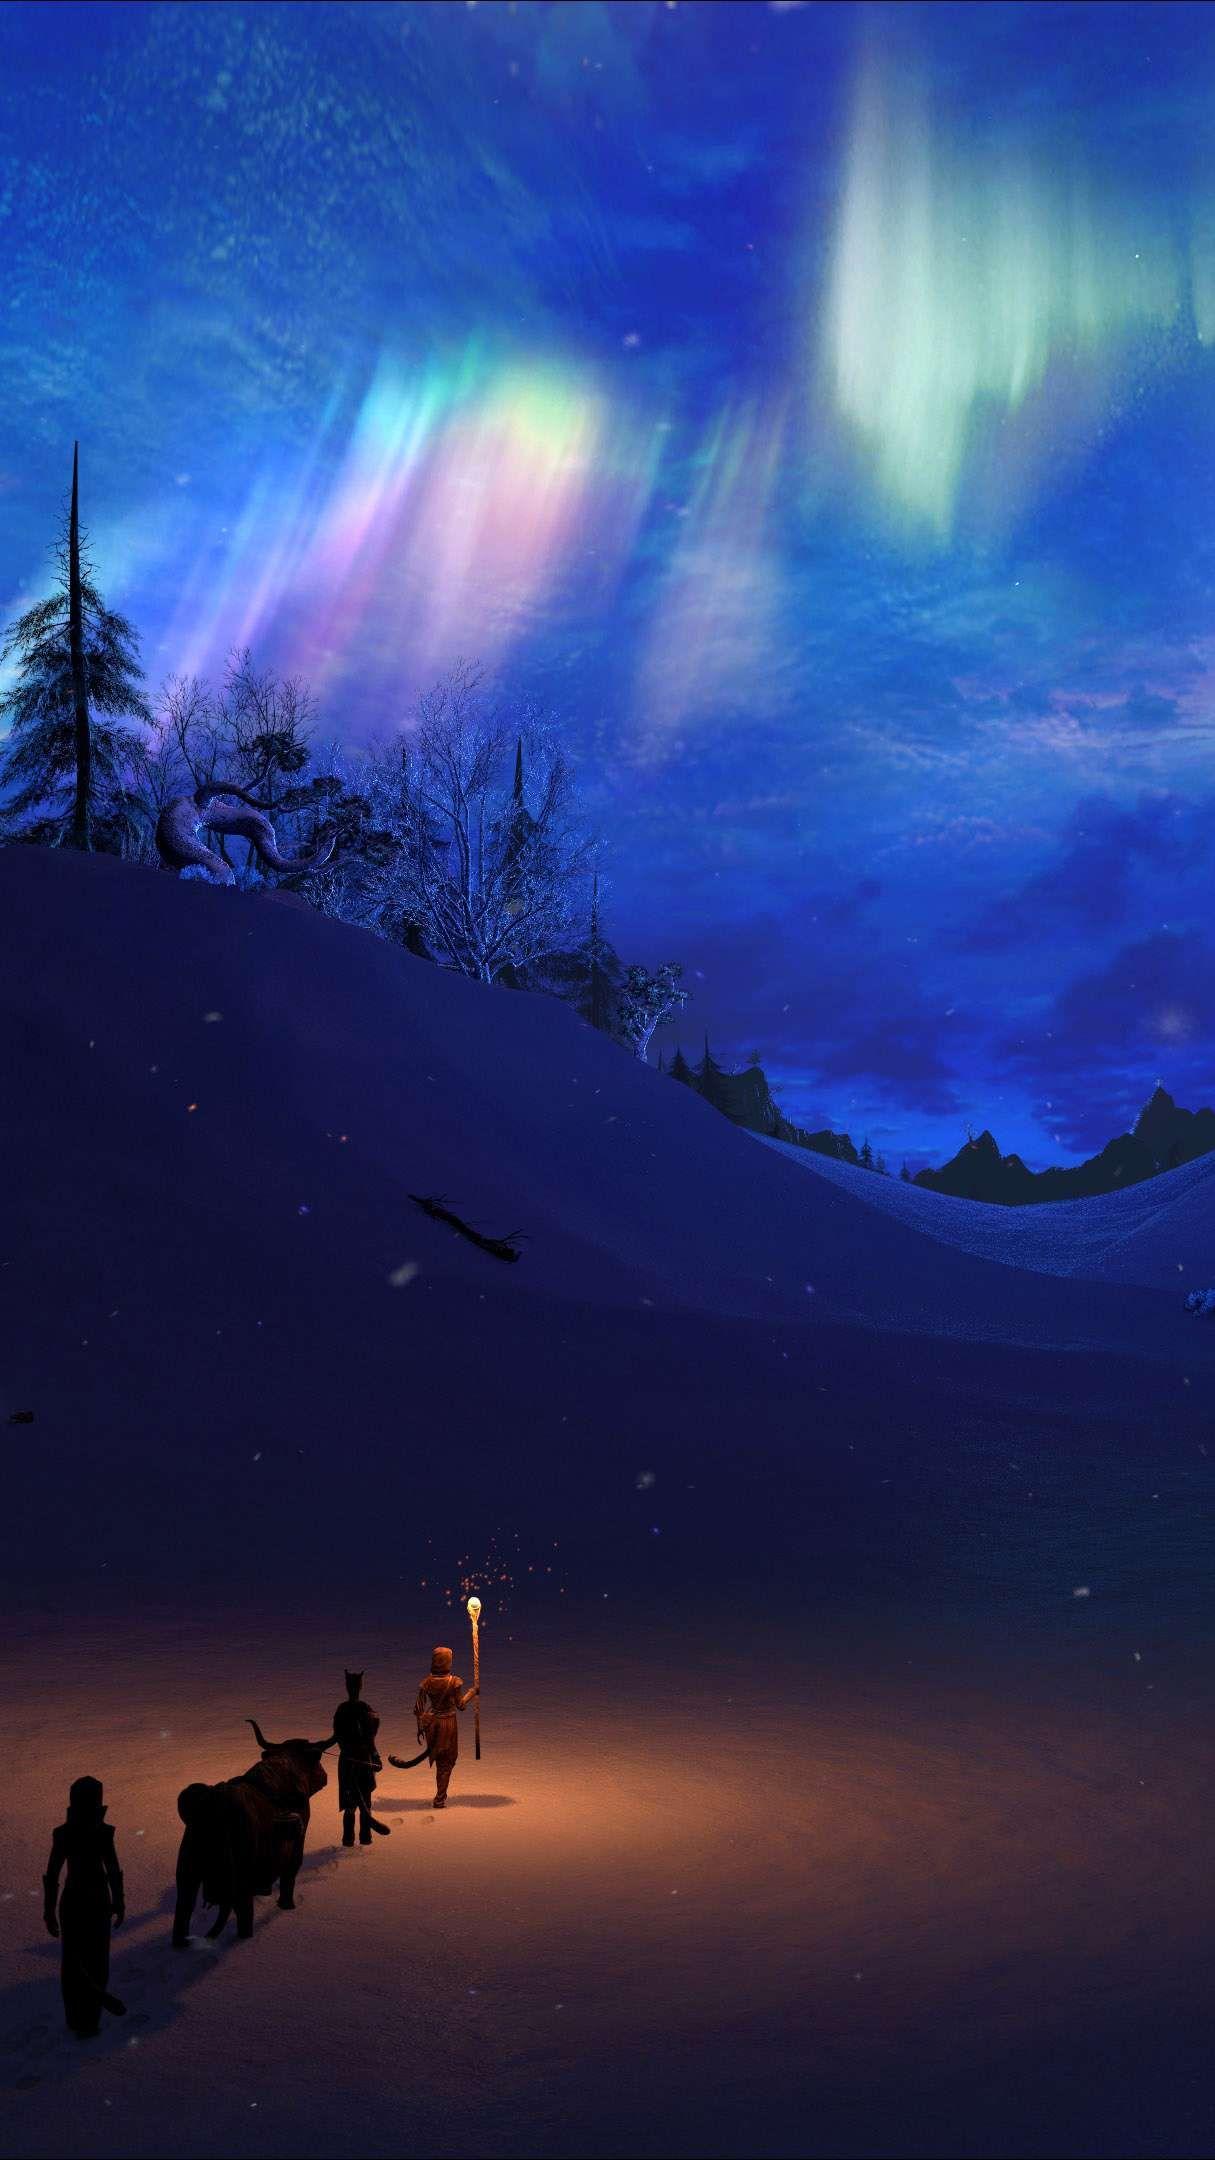 Winter Night North Pole Sky iPhone Wallpaper. iPhone wallpaper sky, Phone wallpaper, Christmas aesthetic wallpaper